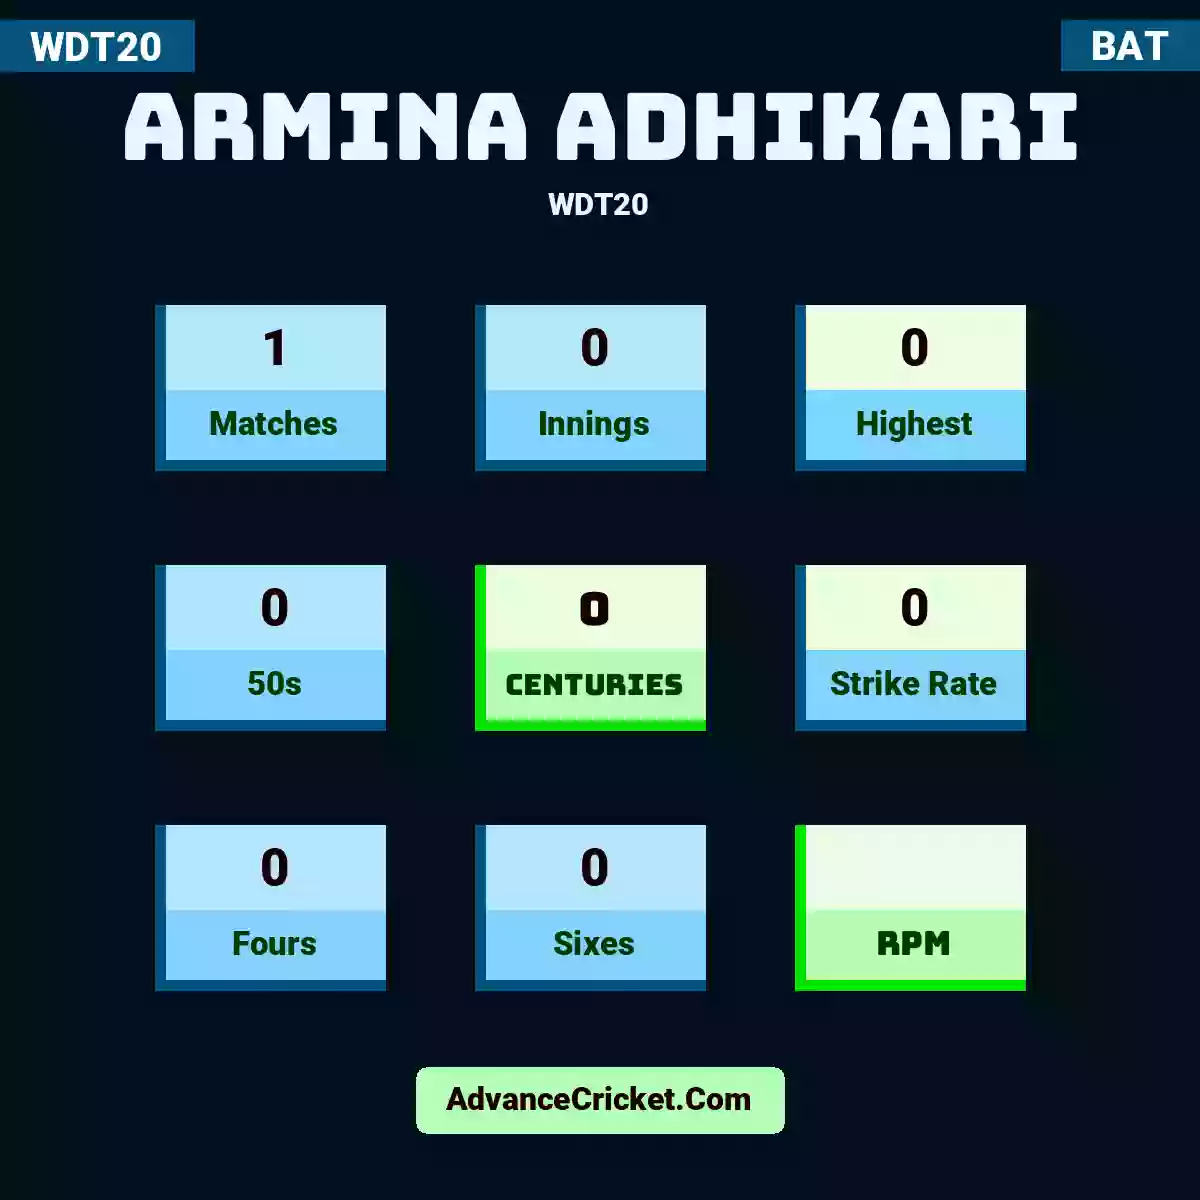 Armina Adhikari WDT20 , Armina Adhikari played 1 matches, scored 0 runs as highest, 0 half-centuries, and 0 centuries, with a strike rate of 0. A.Adhikari hit 0 fours and 0 sixes.